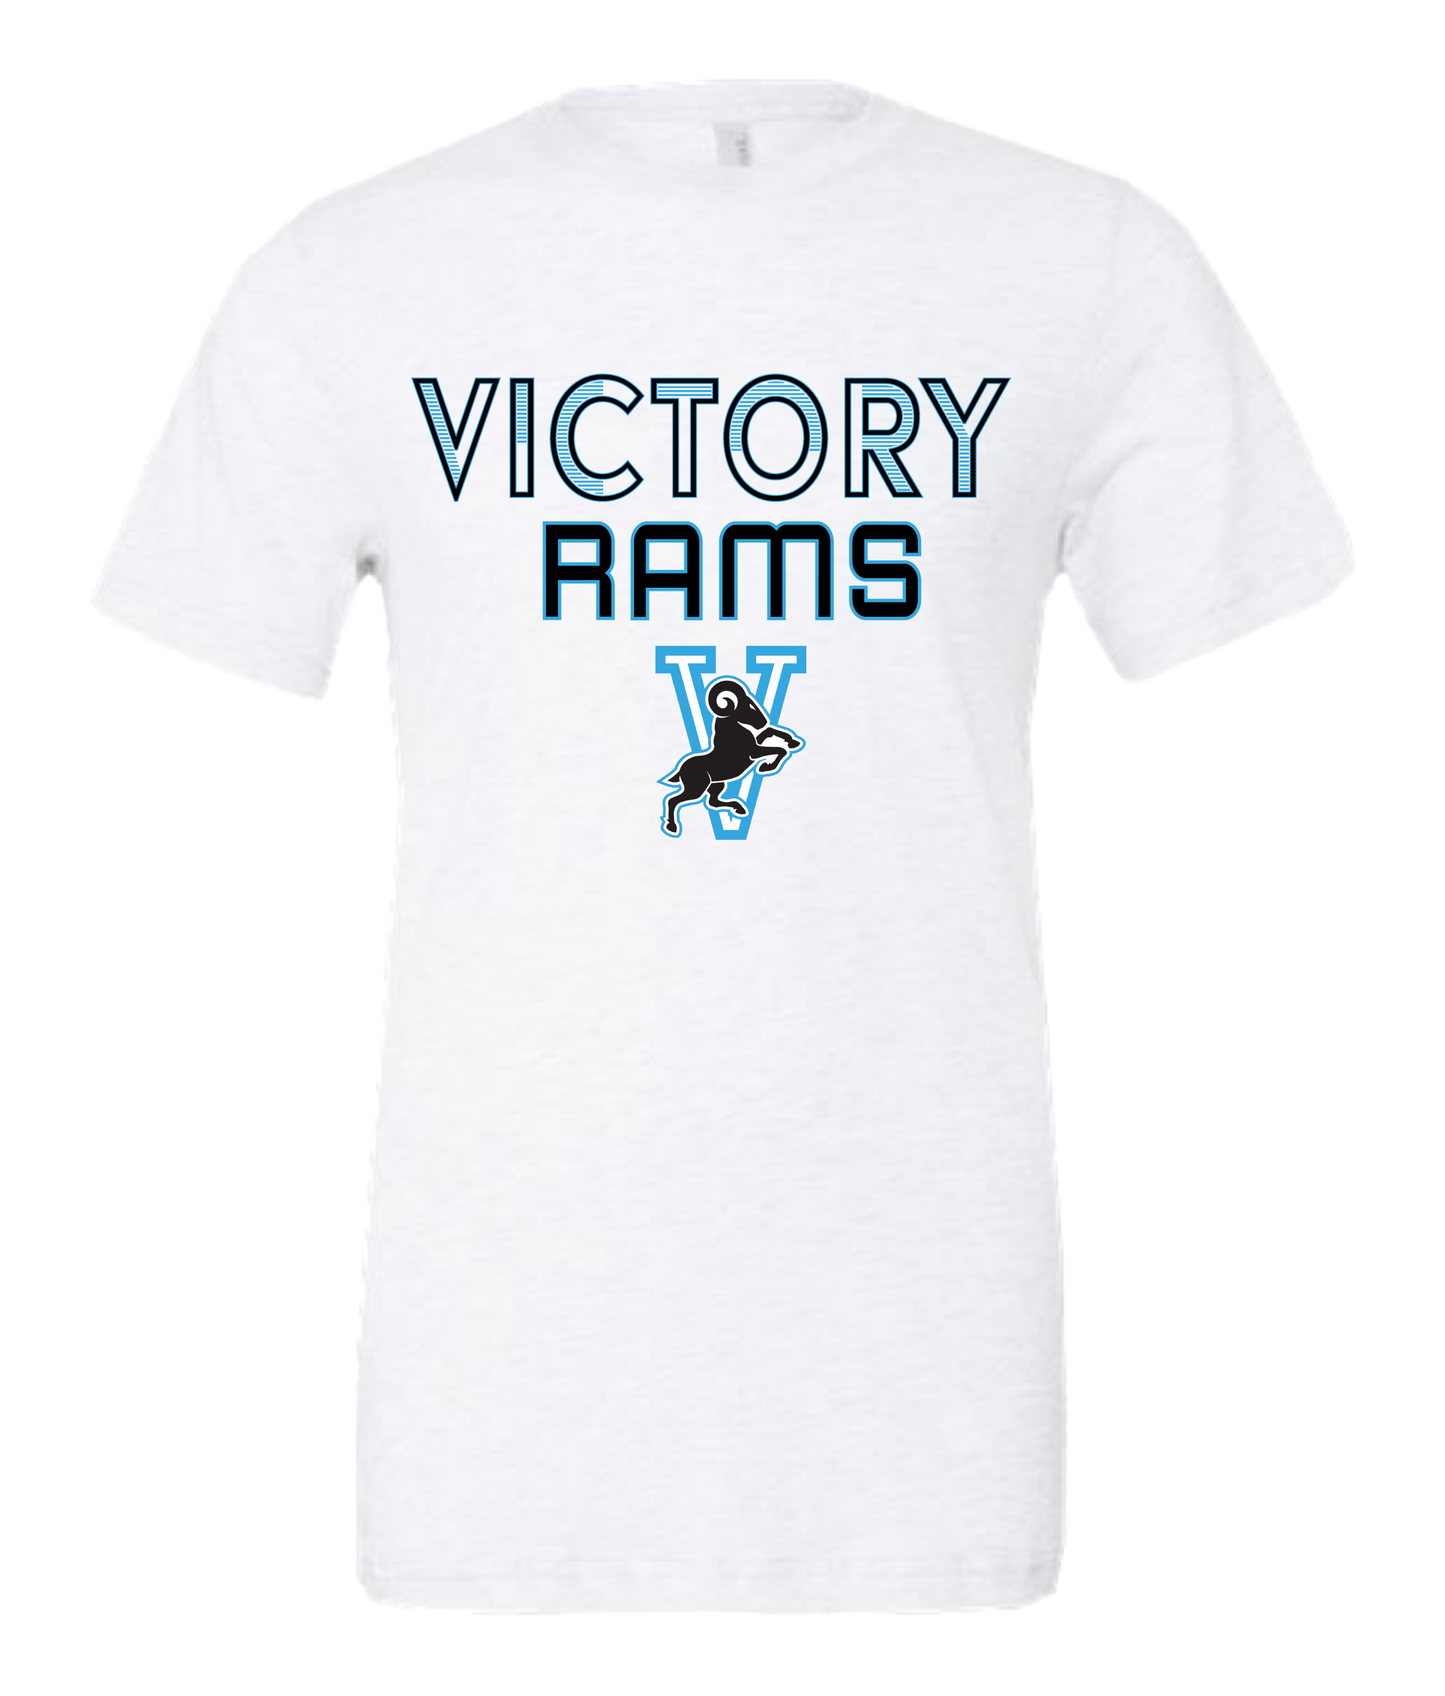 Victory Rams modern logo design t-shirt